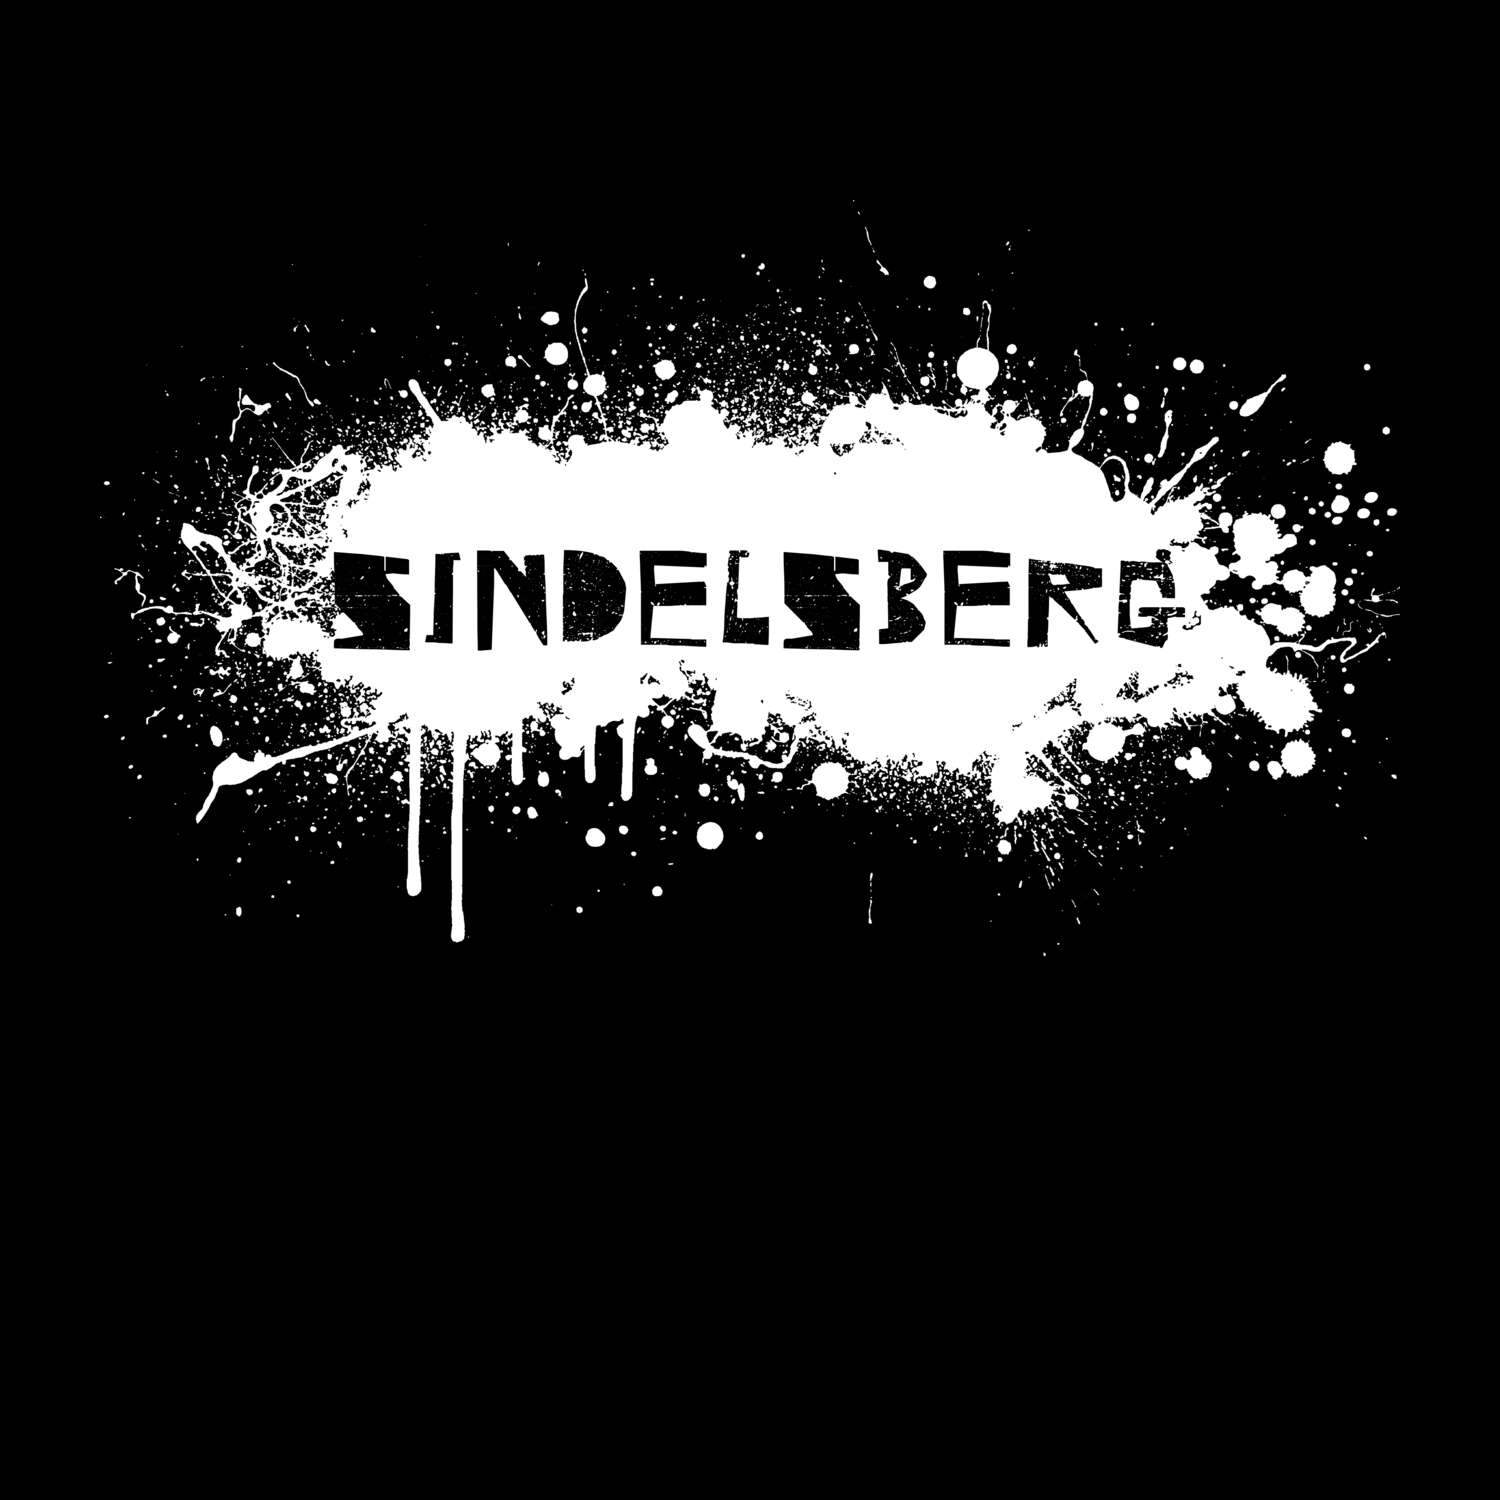 Sindelsberg T-Shirt »Paint Splash Punk«